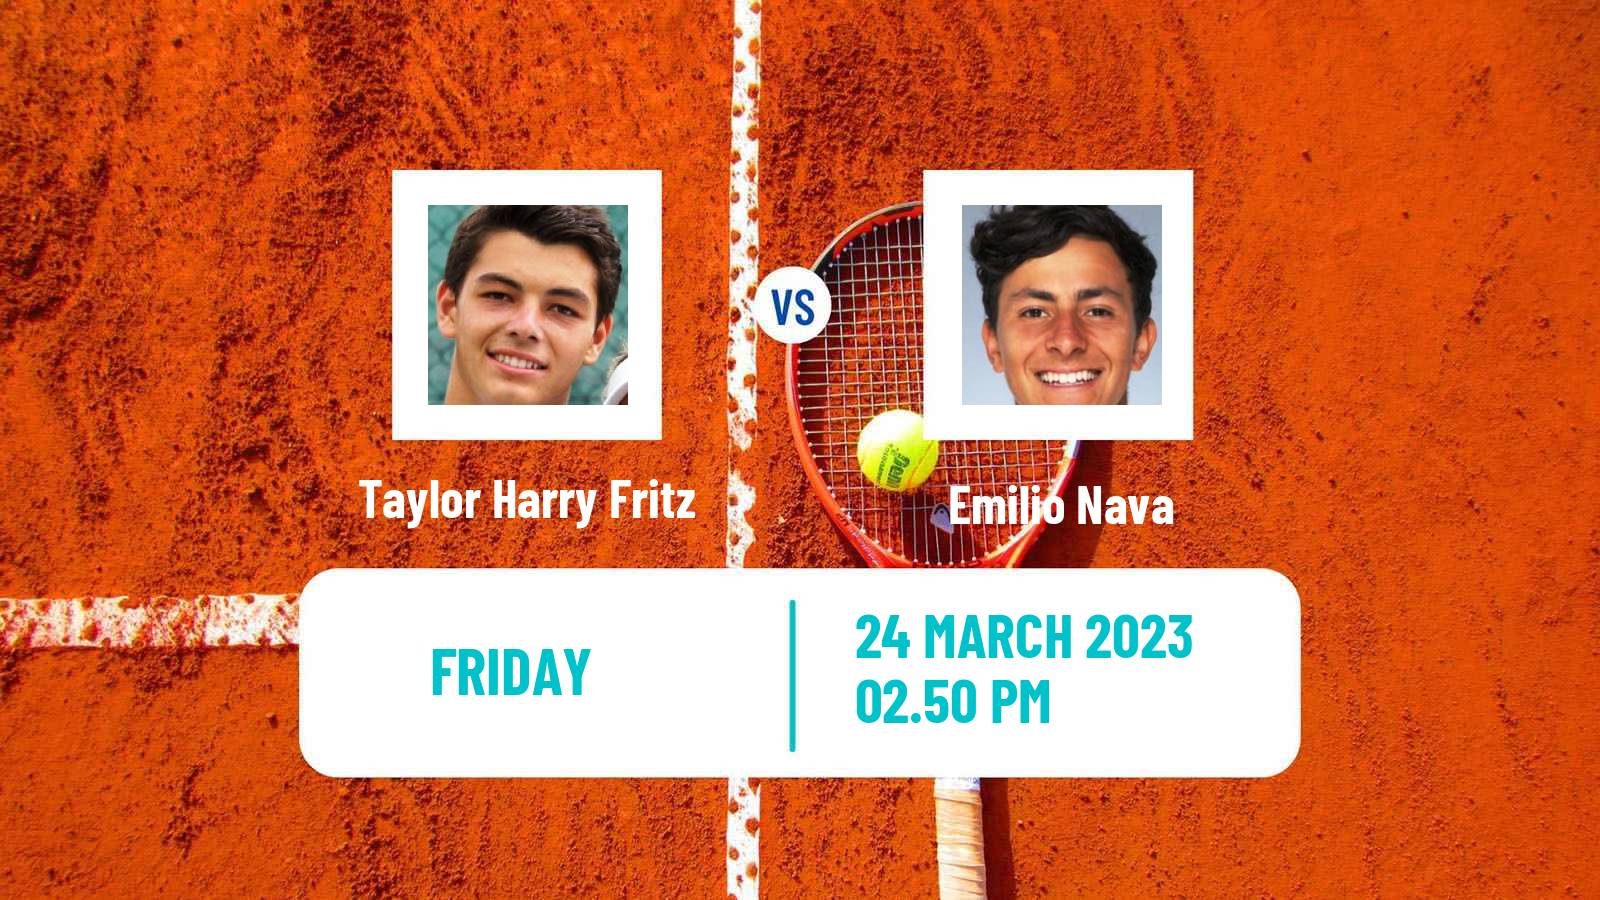 Tennis ATP Miami Taylor Harry Fritz - Emilio Nava